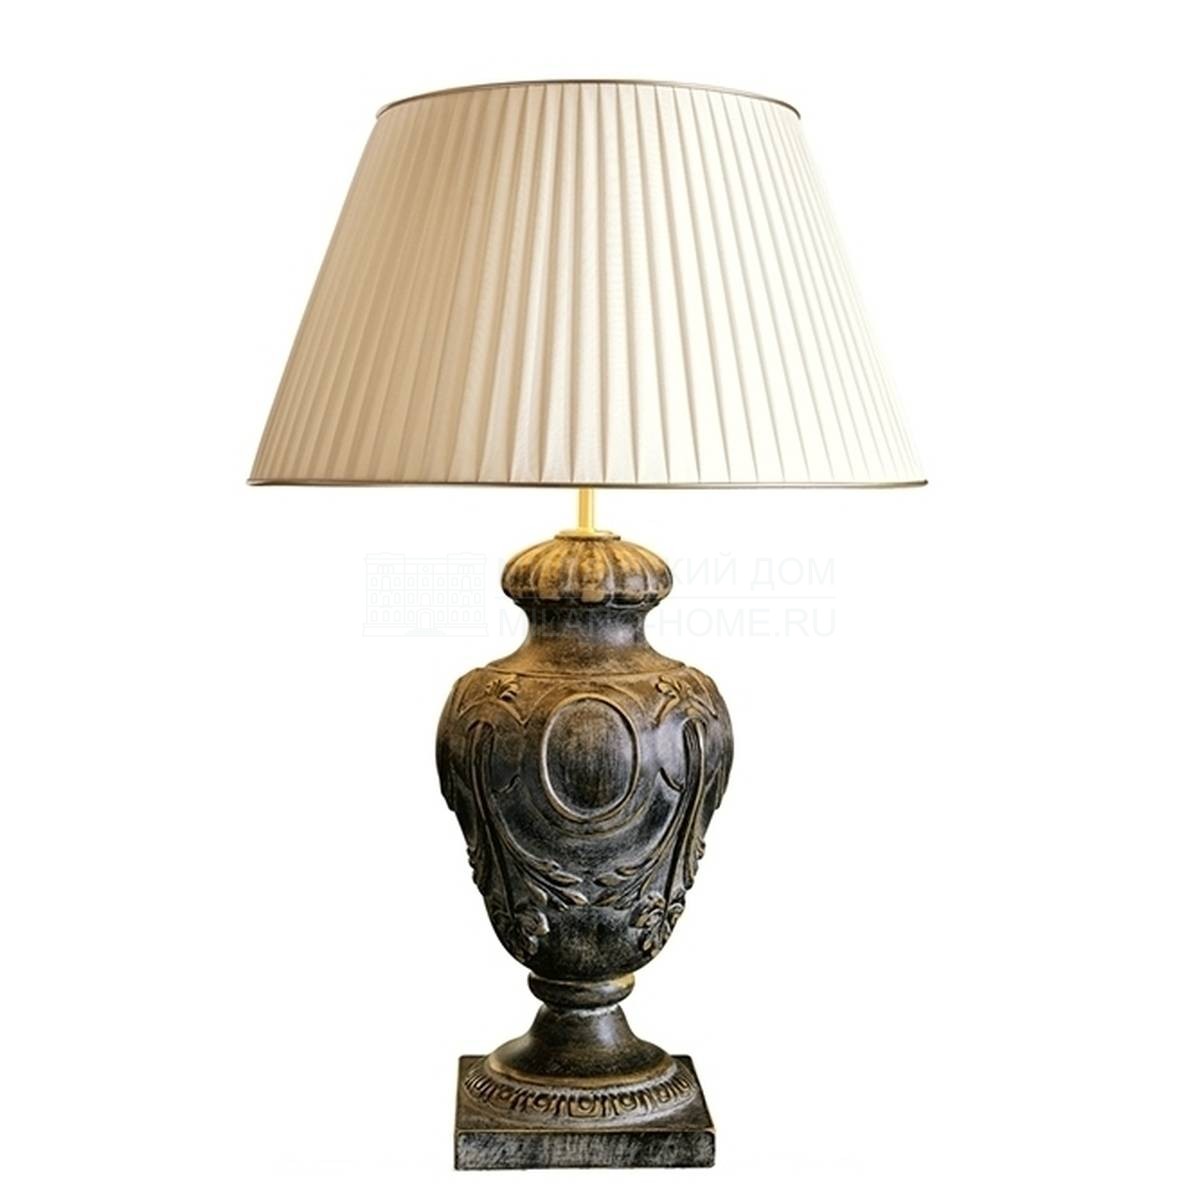 Настольная лампа Petroio table lamp из Италии фабрики MARIONI